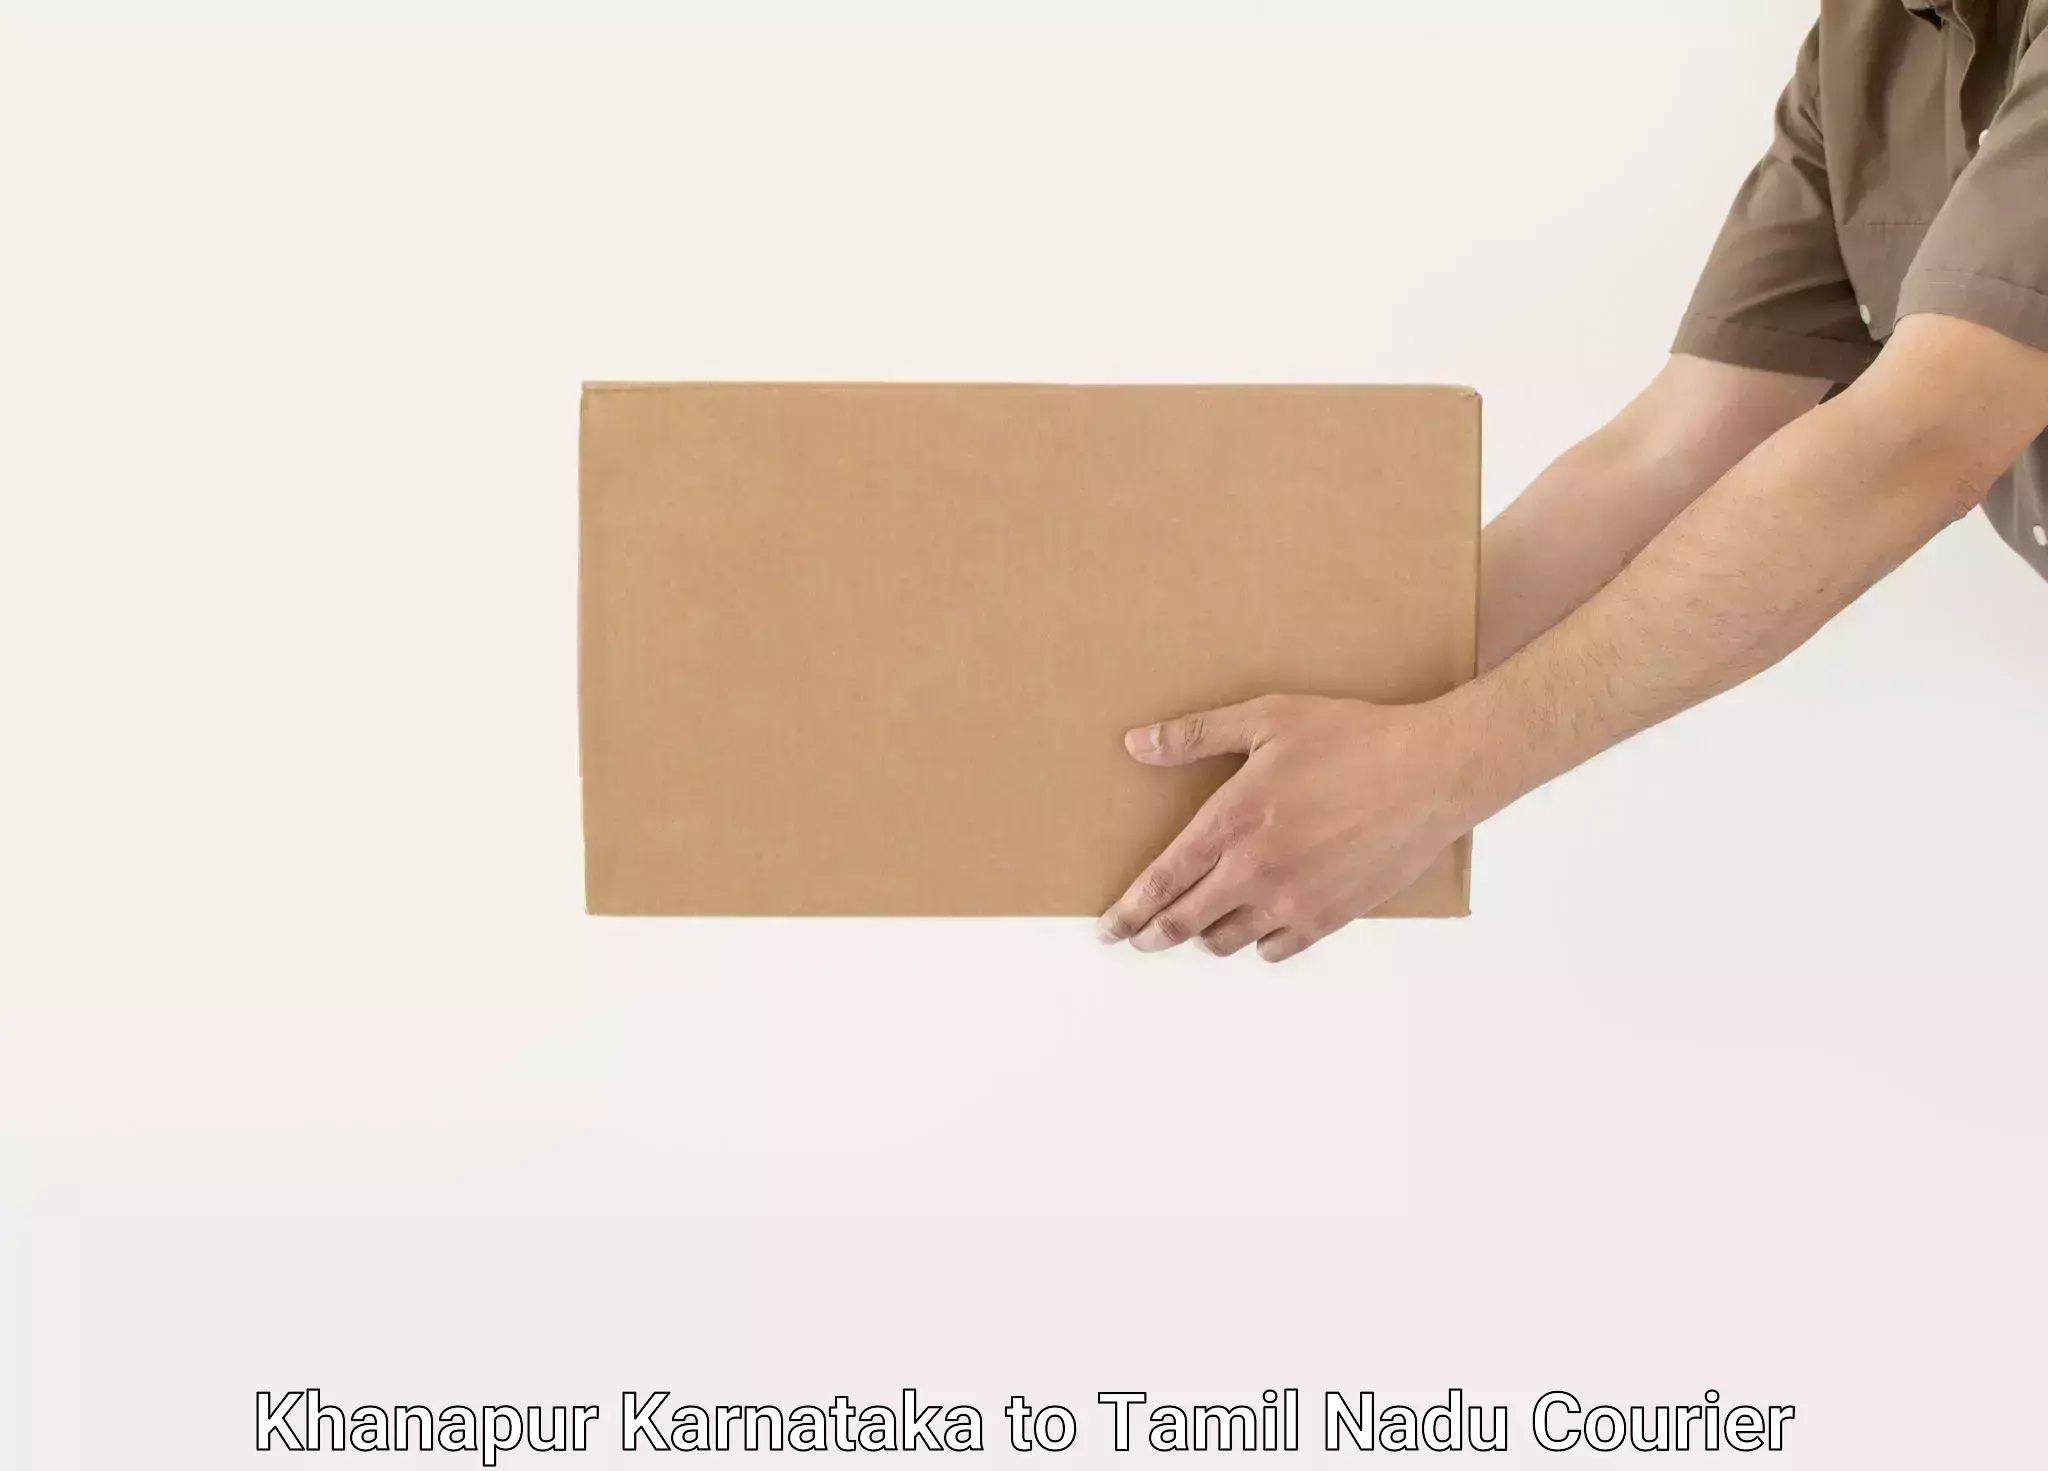 Personalized moving and storage Khanapur Karnataka to Perambur